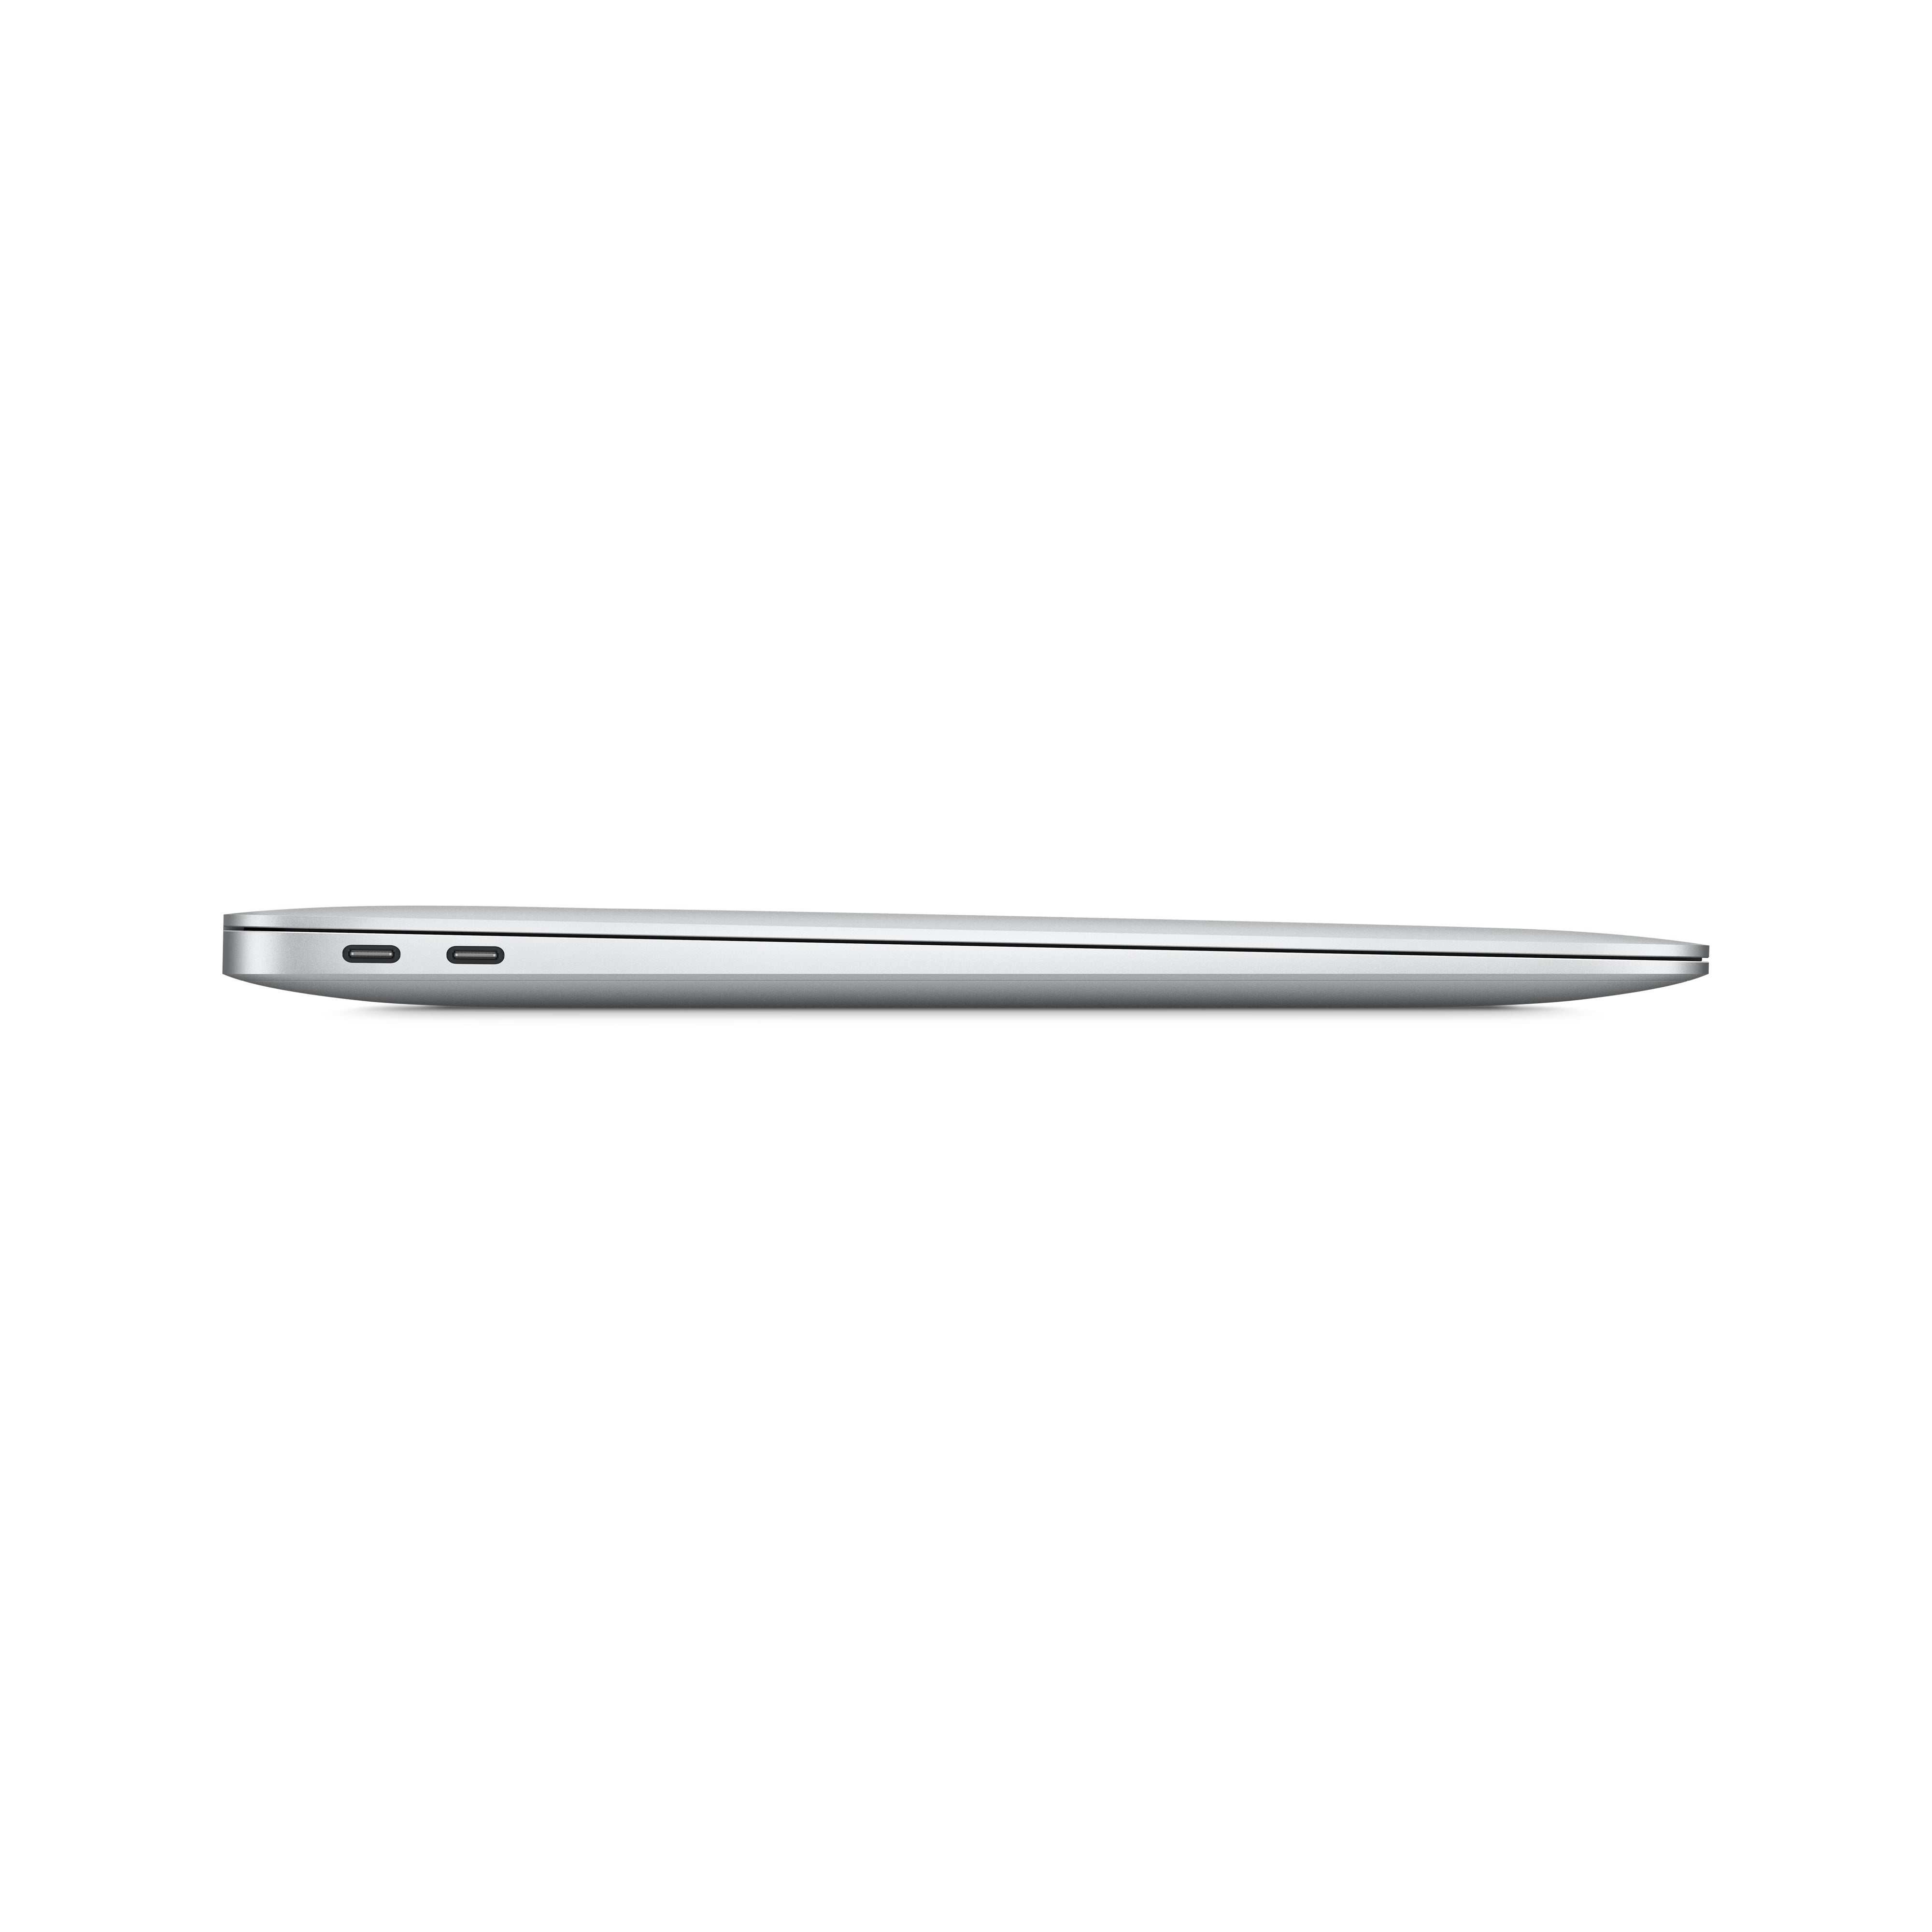 Pre-Owned 13-inch MacBook Air M1 16GB / 256GB / Silver (2020 Model ...